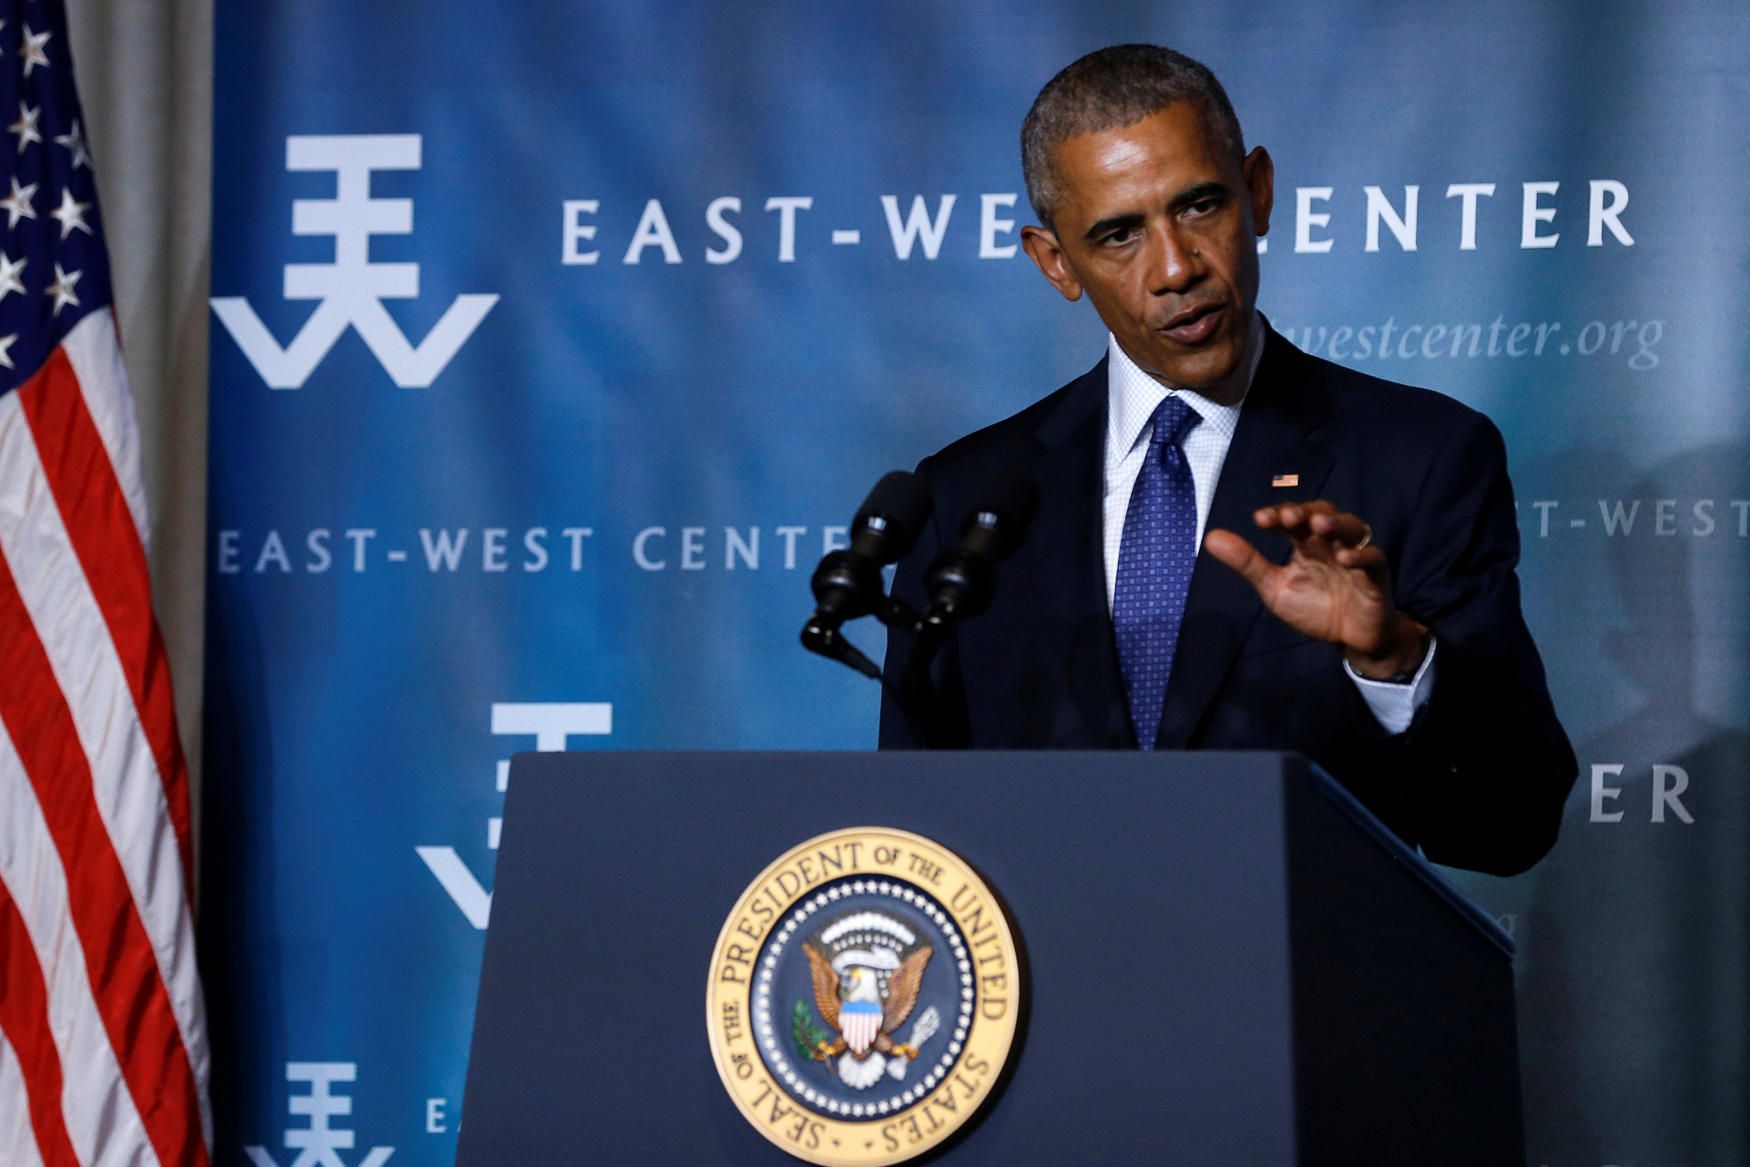 Ahead of Suu Kyi visit, Obama weighs Myanmar sanctions relief - sources